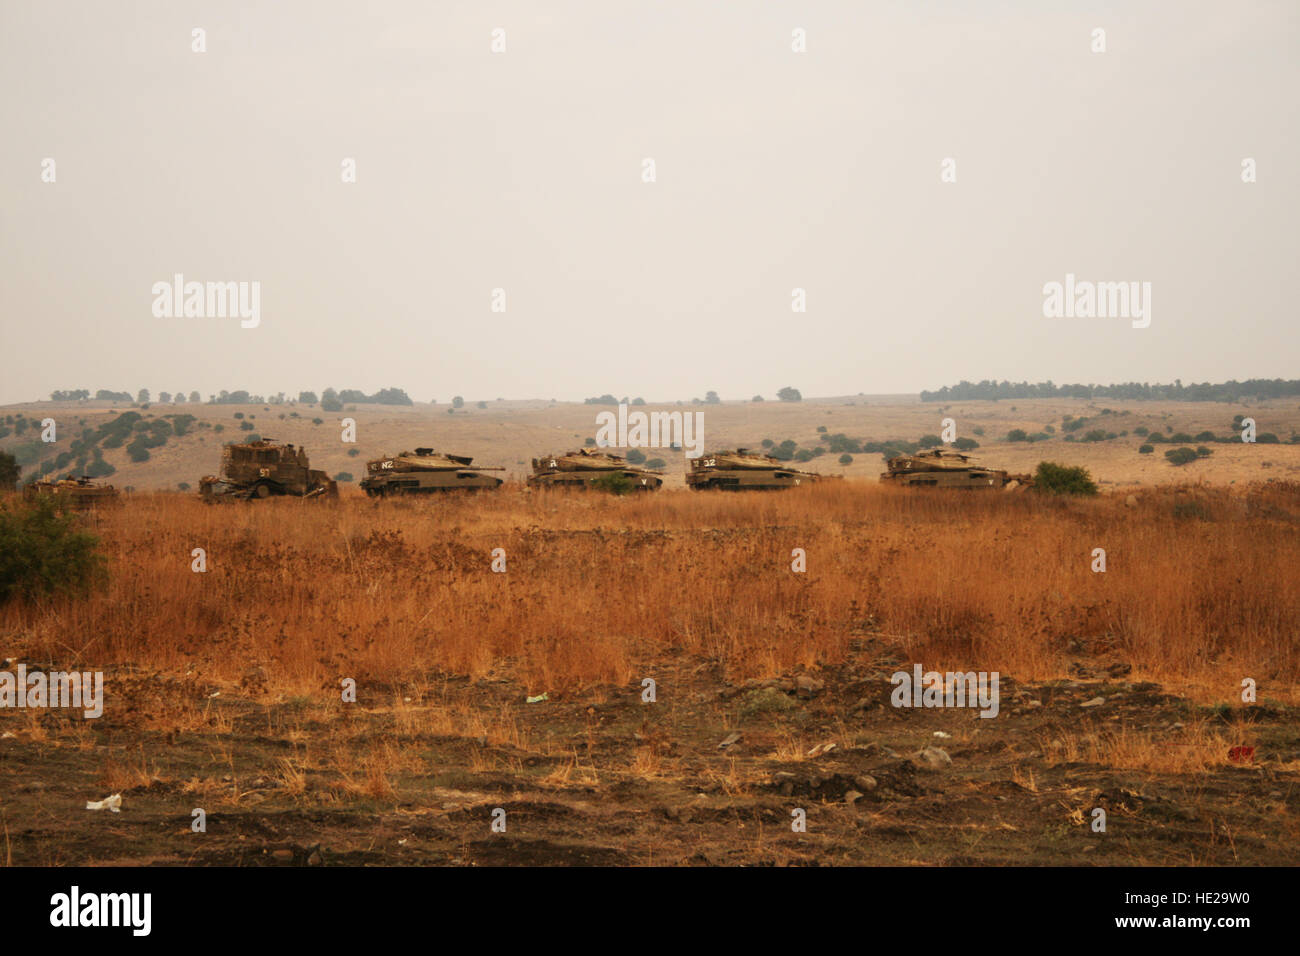 Israel army Idf modern main battle tank Merkava Mk 4 Stock Photo